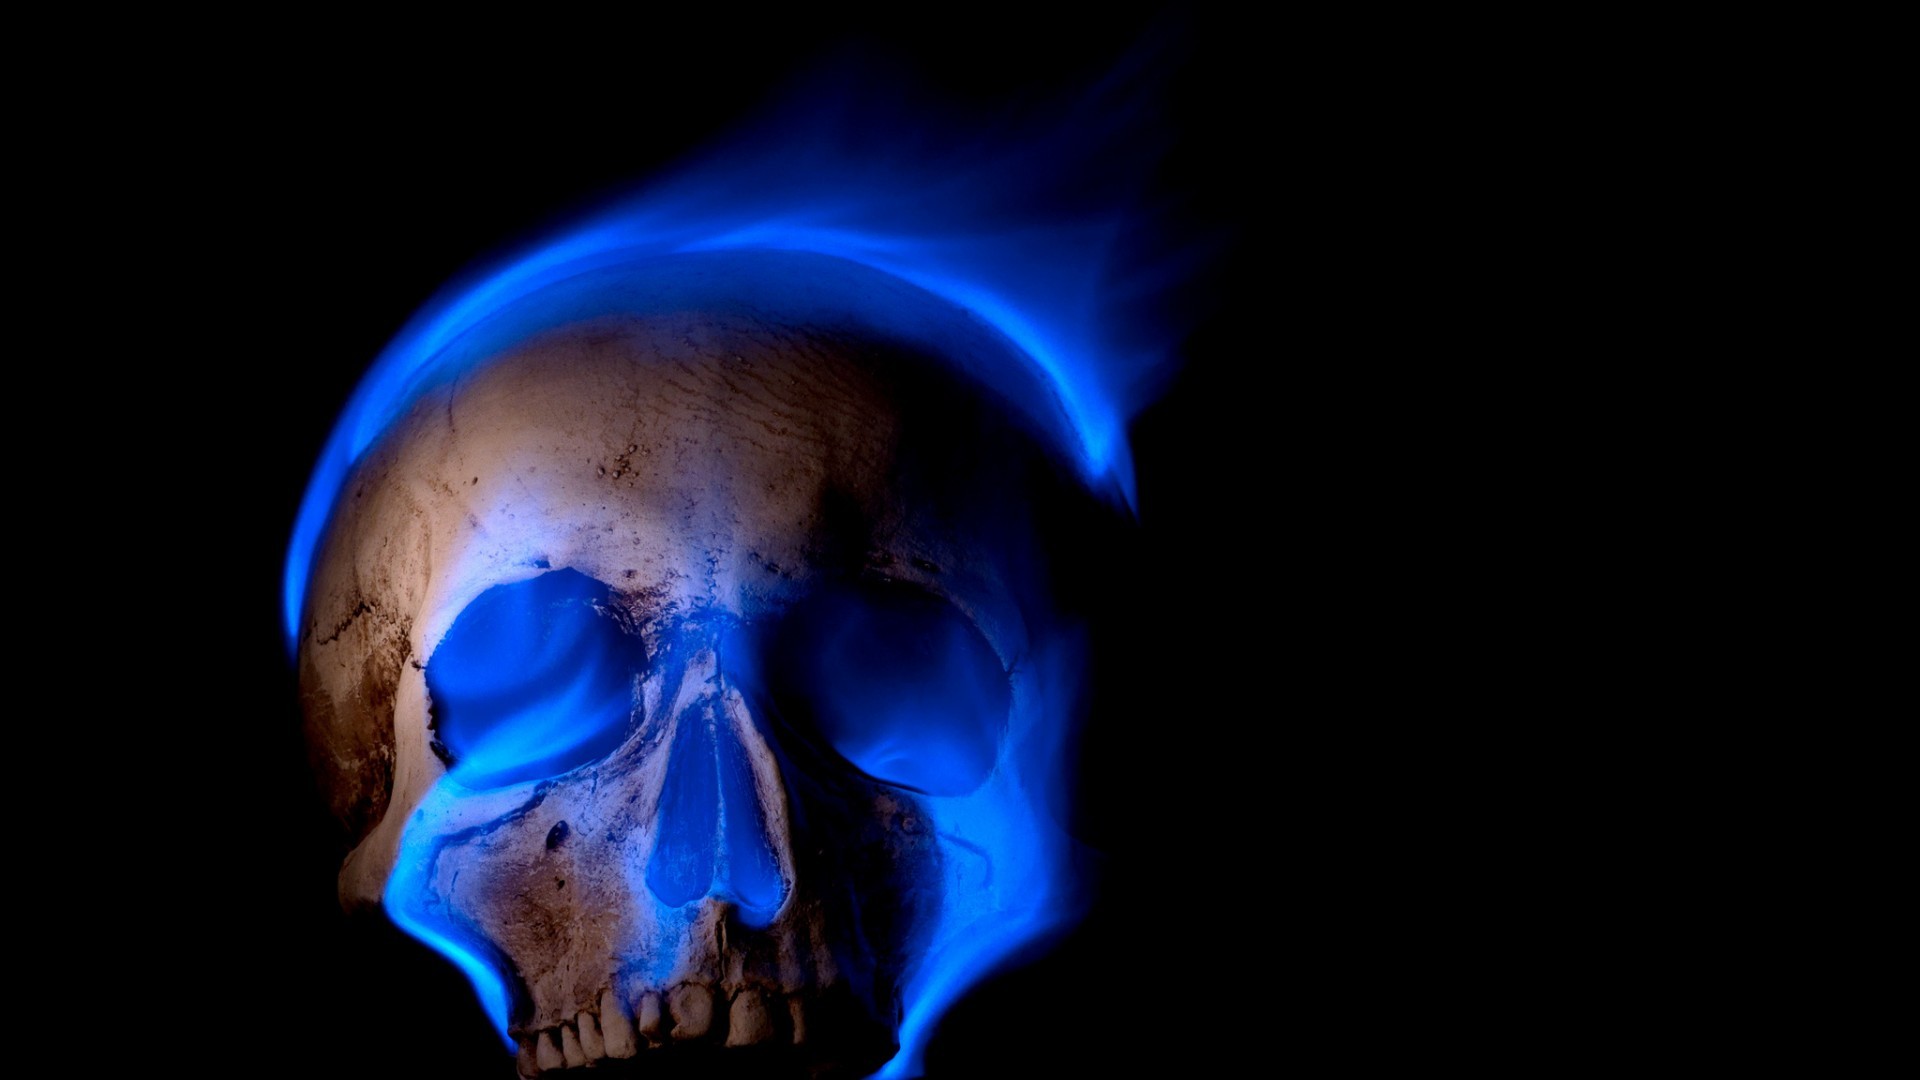 digital Art, Skull, Black Background, Teeth, Burning, Blue Flames, Fire, Death, Spooky, Gothic Wallpaper